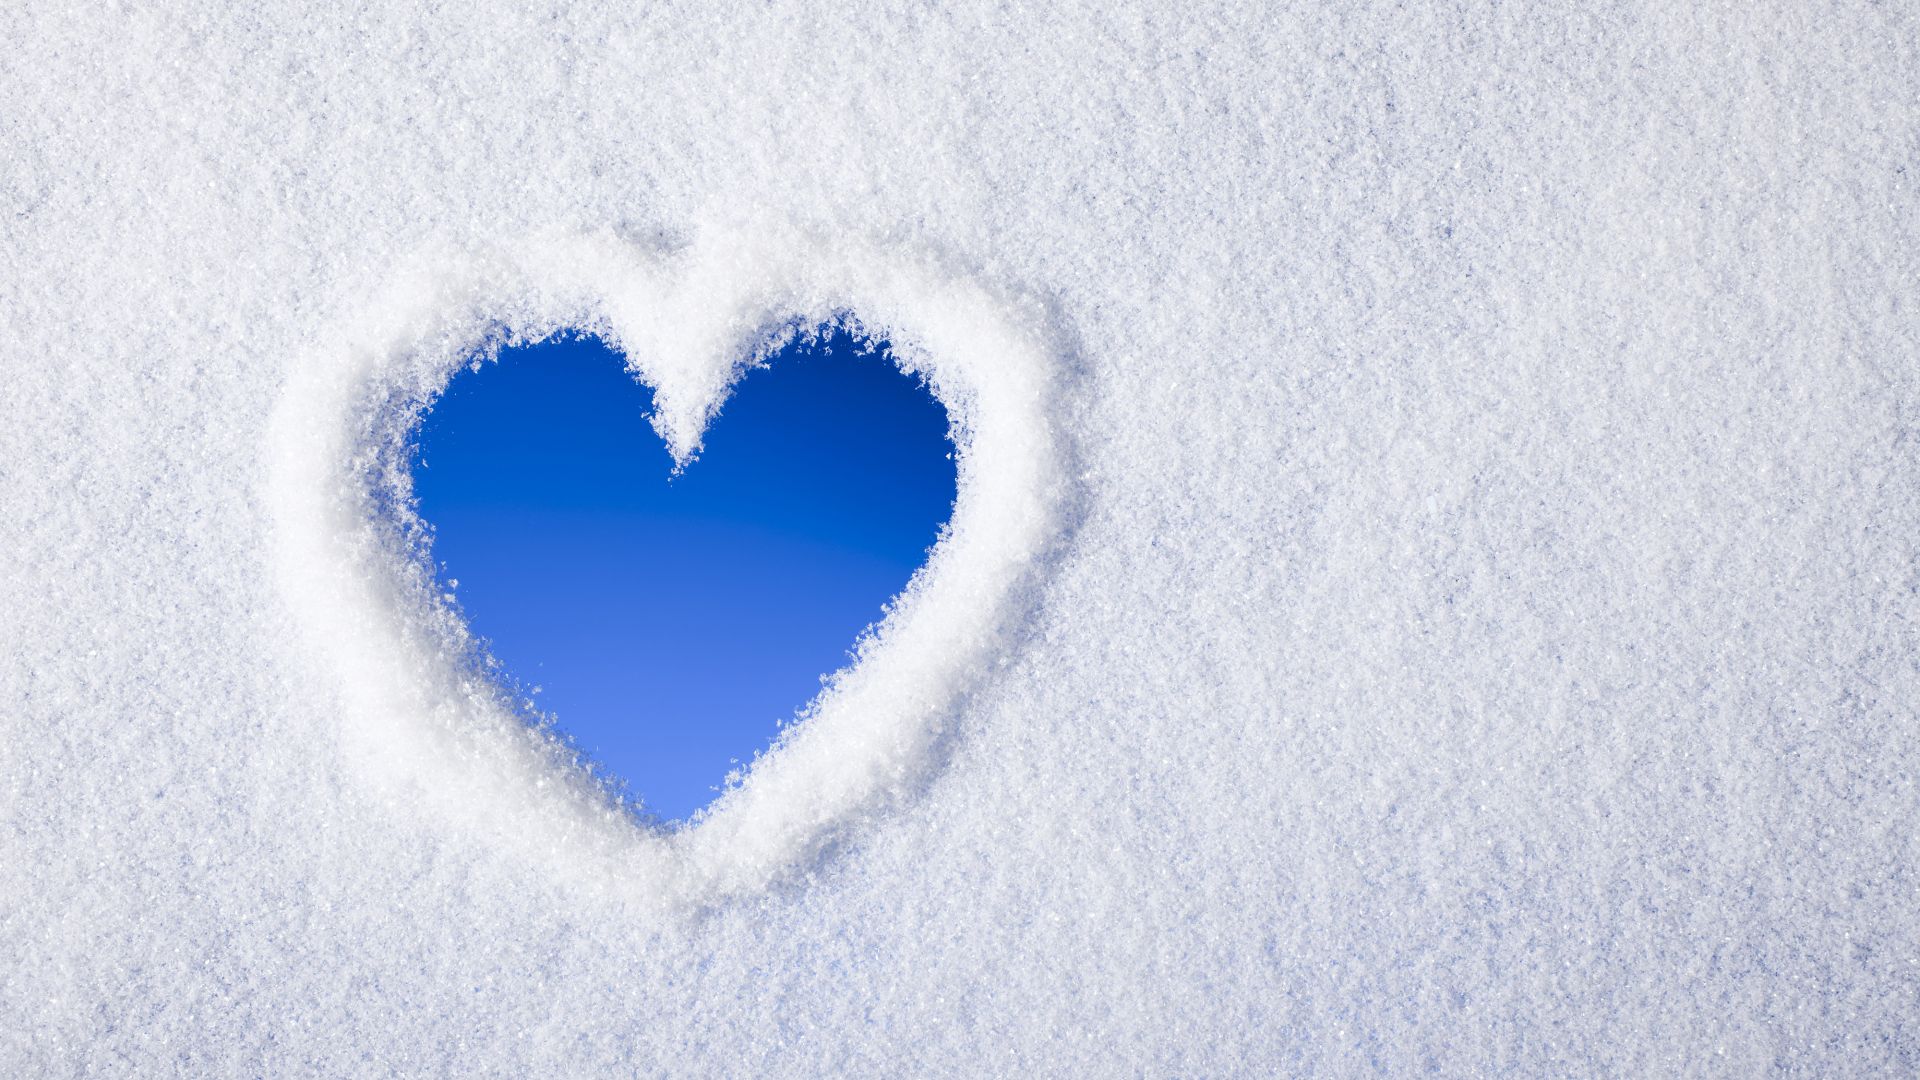 фото любовь, сердце, love image, heart, , snow, 4k (horizontal)